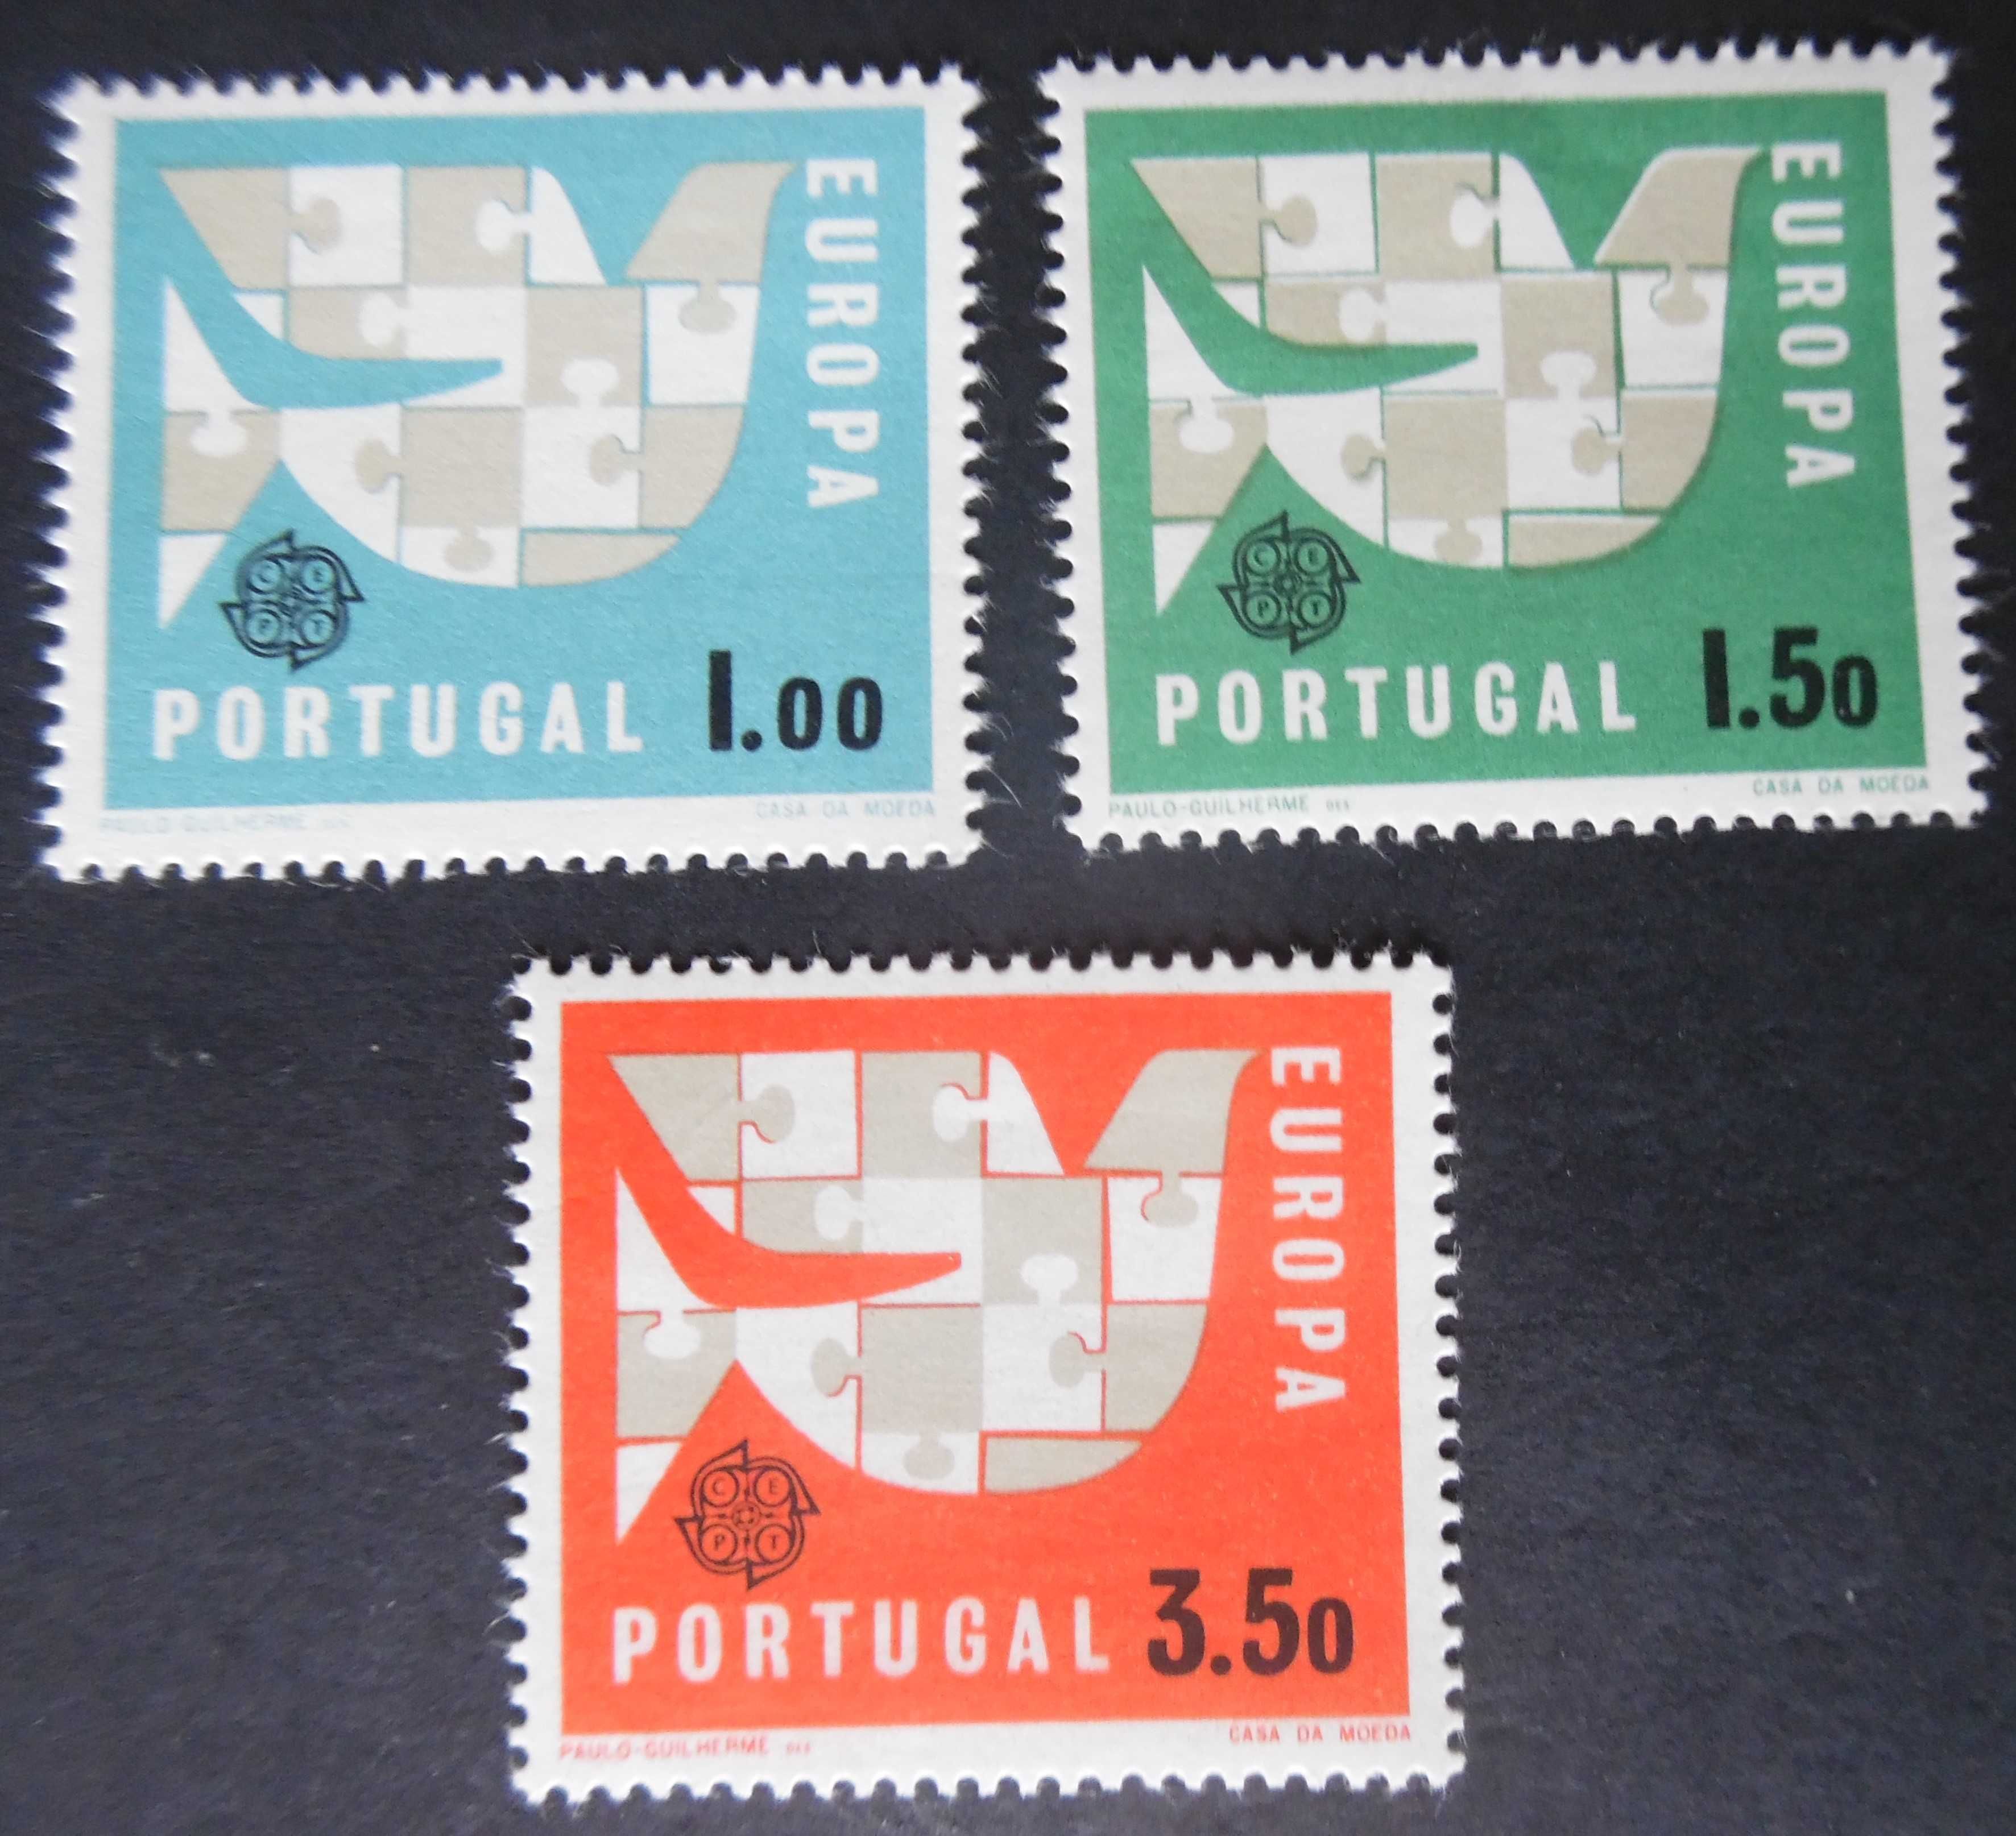 Selos Portugal 1963-Europa CEPT Completo Novos s/ marca charneira